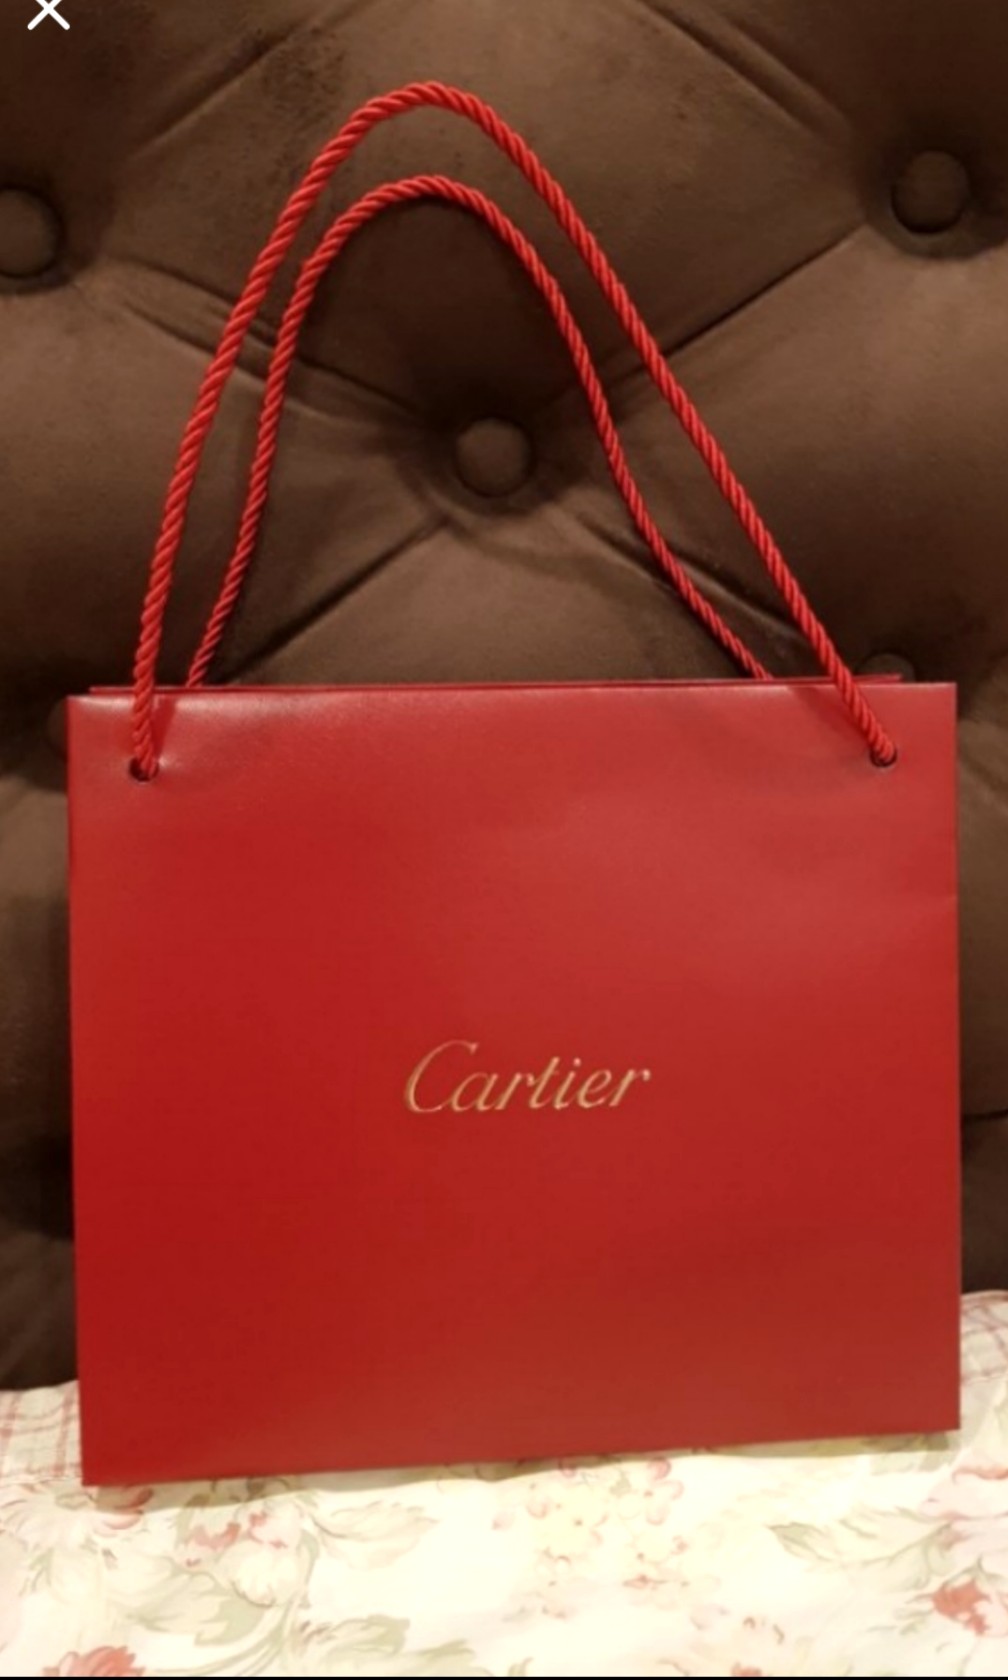 Cartier Gift Bag Shopping Paper Brand New 10.25 x 8.5 x 3.5